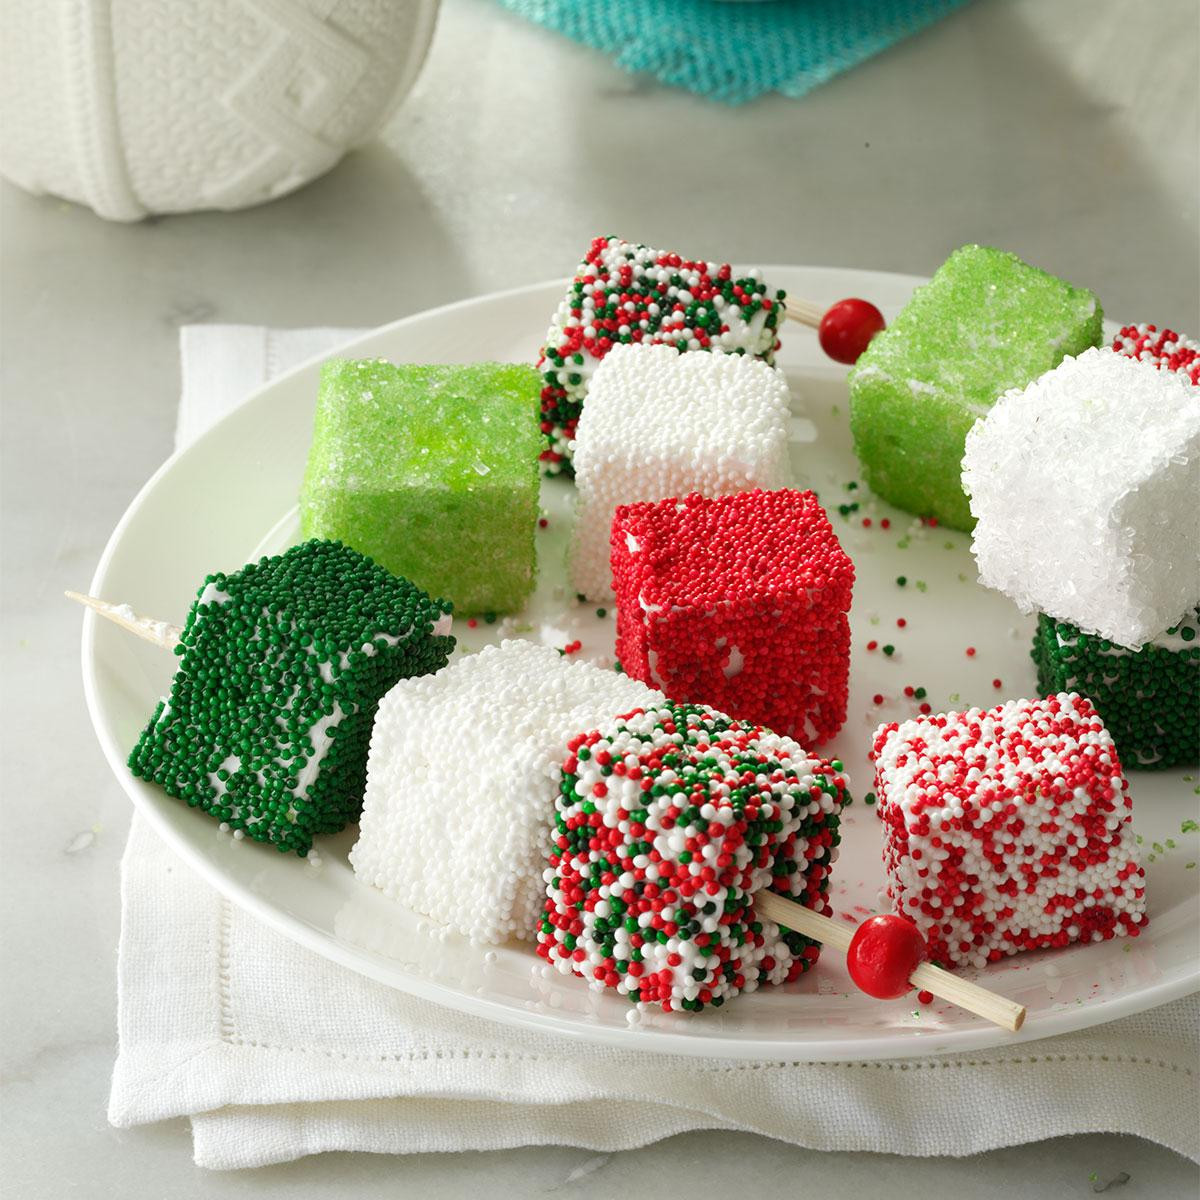 Easy Homemade Christmas Candy
 Homemade Holiday Marshmallows Recipe